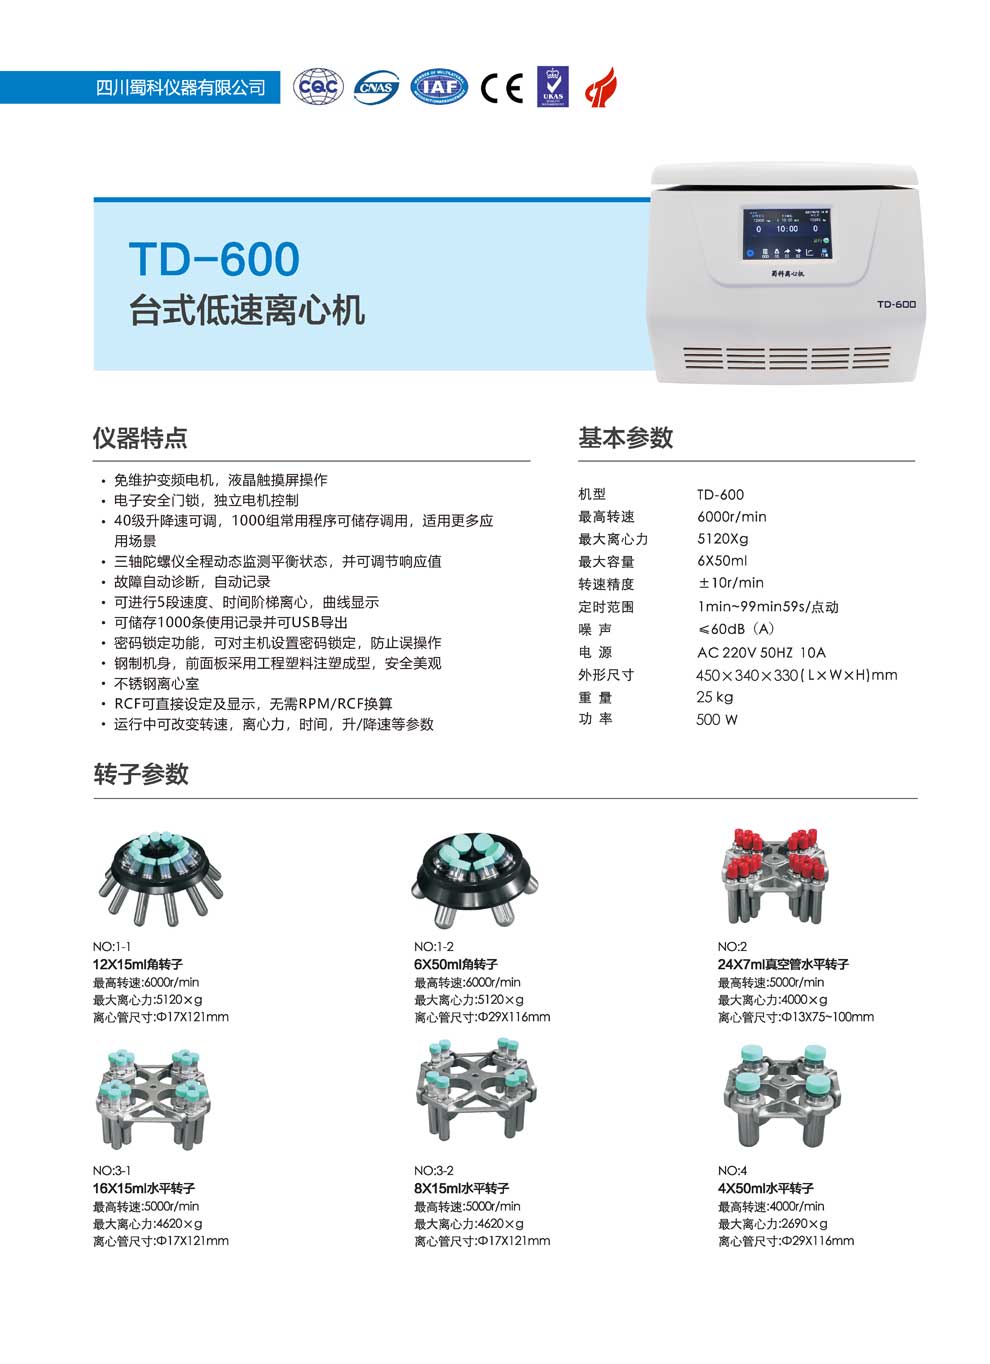 TD-600-彩页.jpg